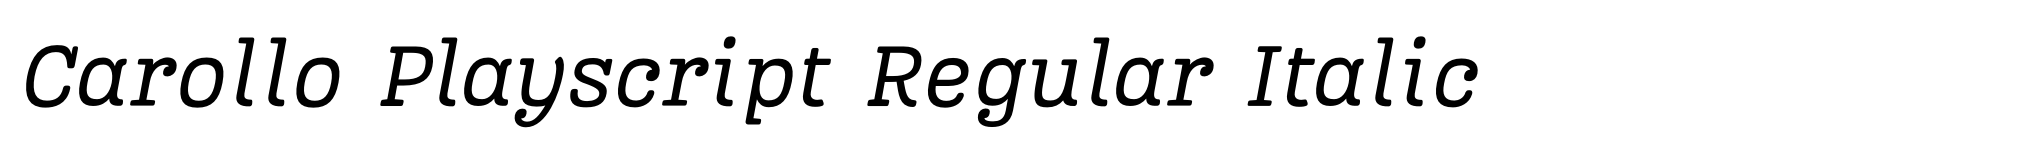 Carollo Playscript Regular Italic image